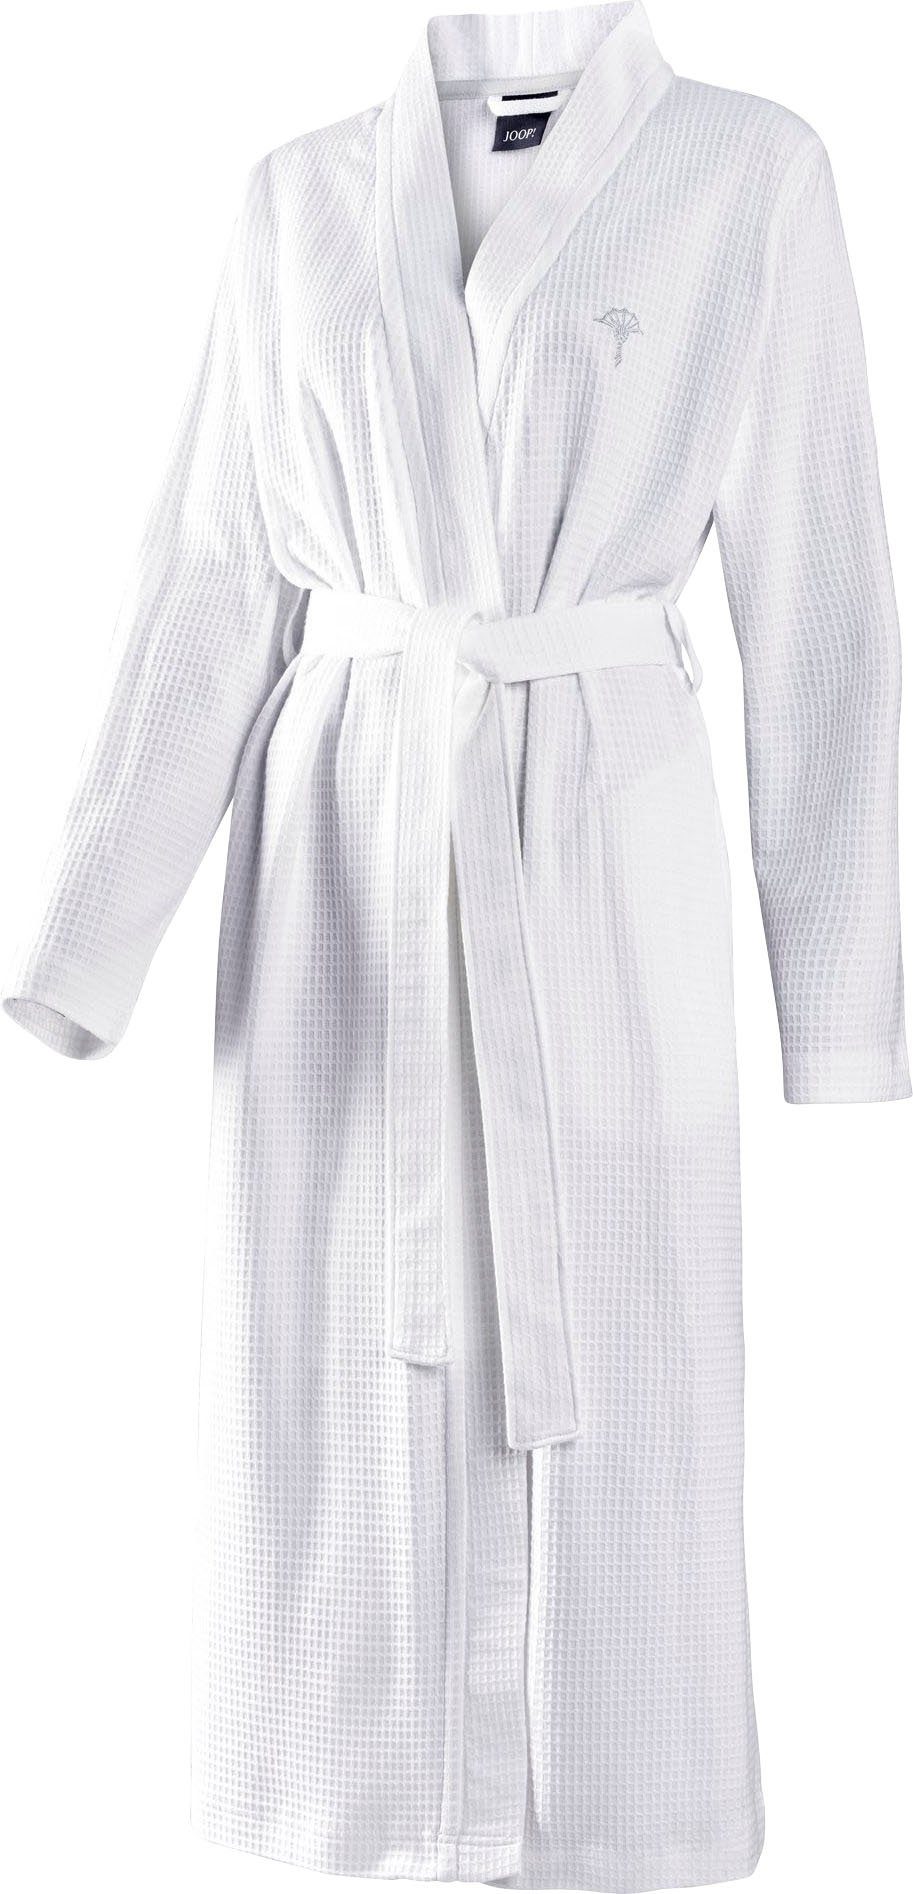 Joop! Damenbademantel mit Gürtel, Kurzform, UNI-PIQUÉ, kontrastigem Kornblumen-Stick Baumwolle, Kimono-Kragen